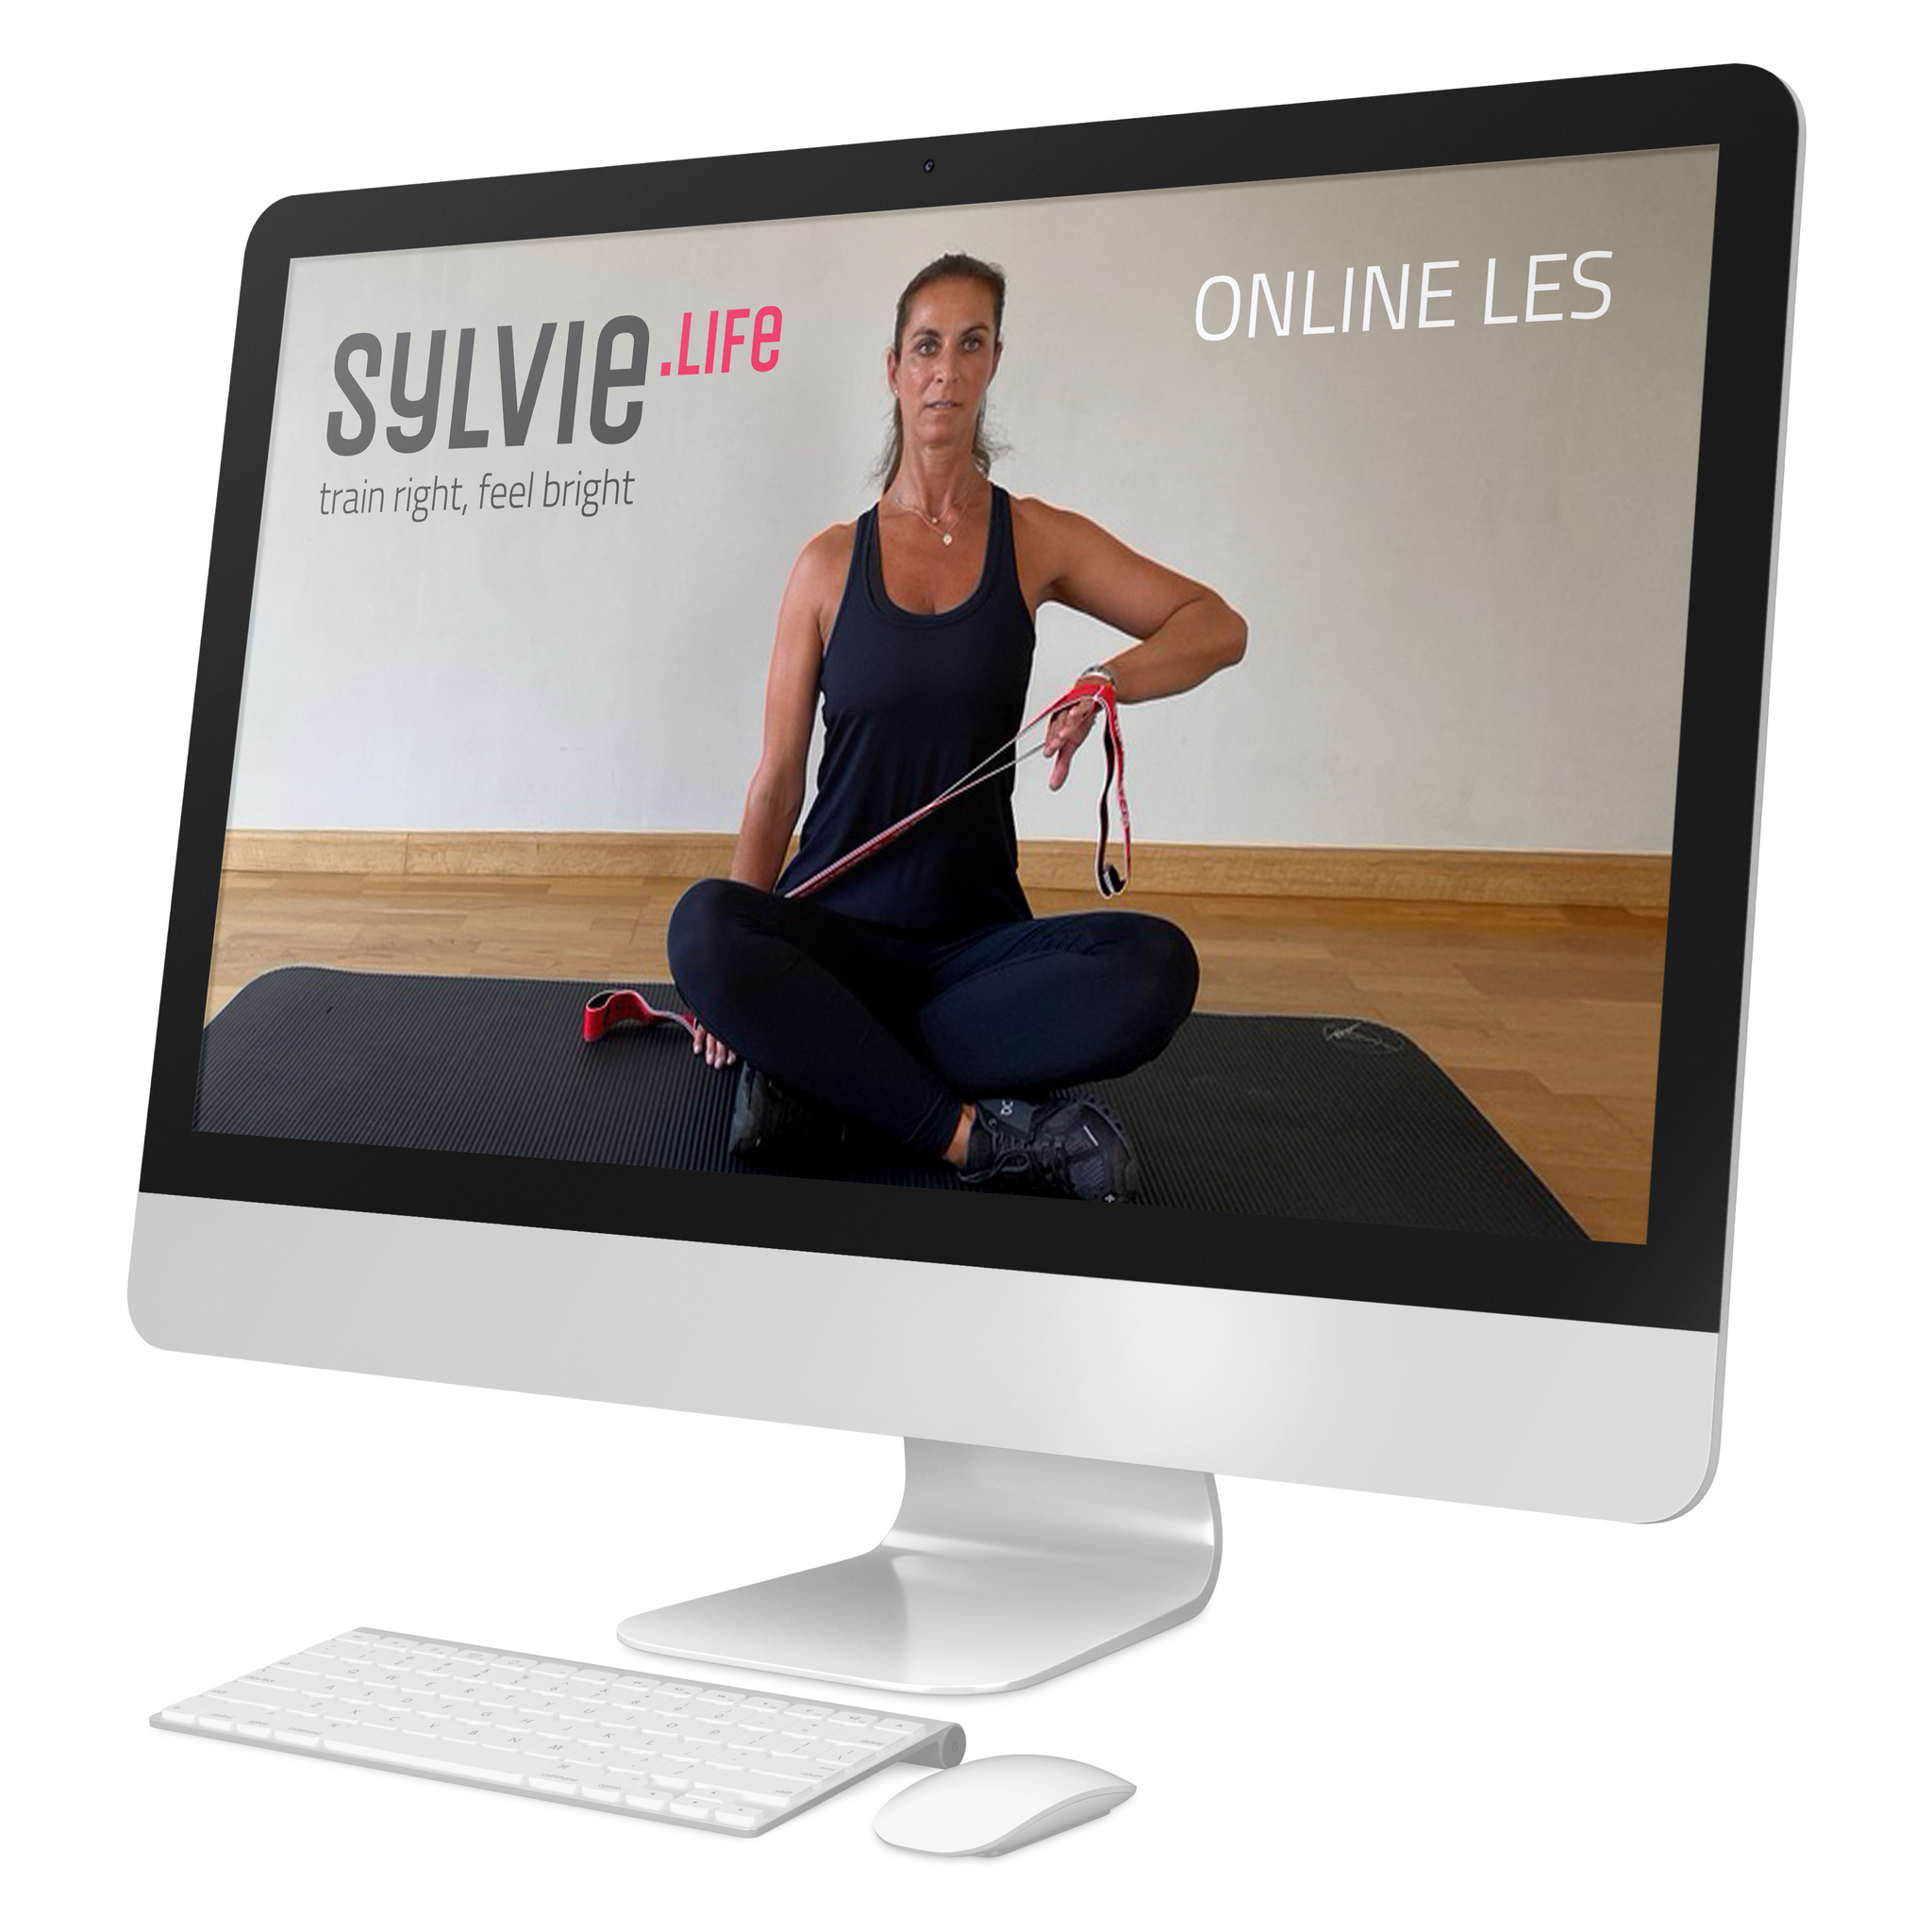 Sylvie.life online les Pilates, EasyFit & CoreBase - SYLVIE.LIFE Pilates, Personal Trainer Brugge, Antwerpen